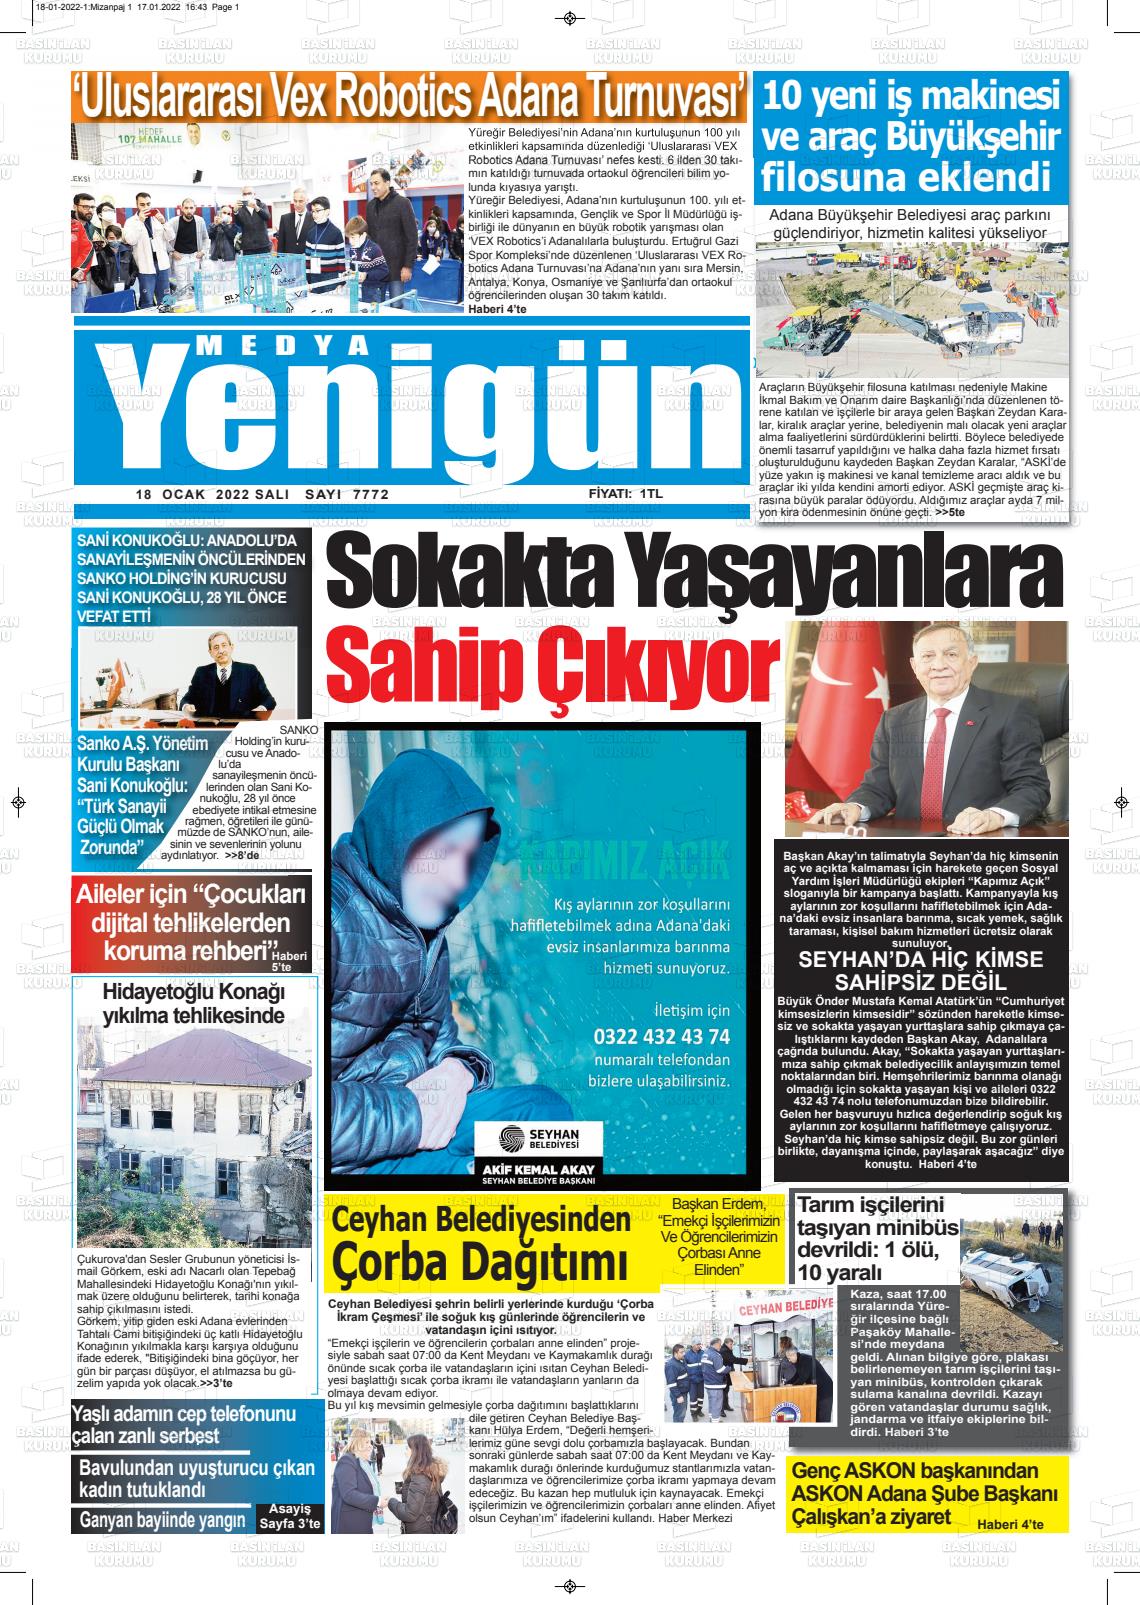 18 Ocak 2022 Medya Yenigün Gazete Manşeti